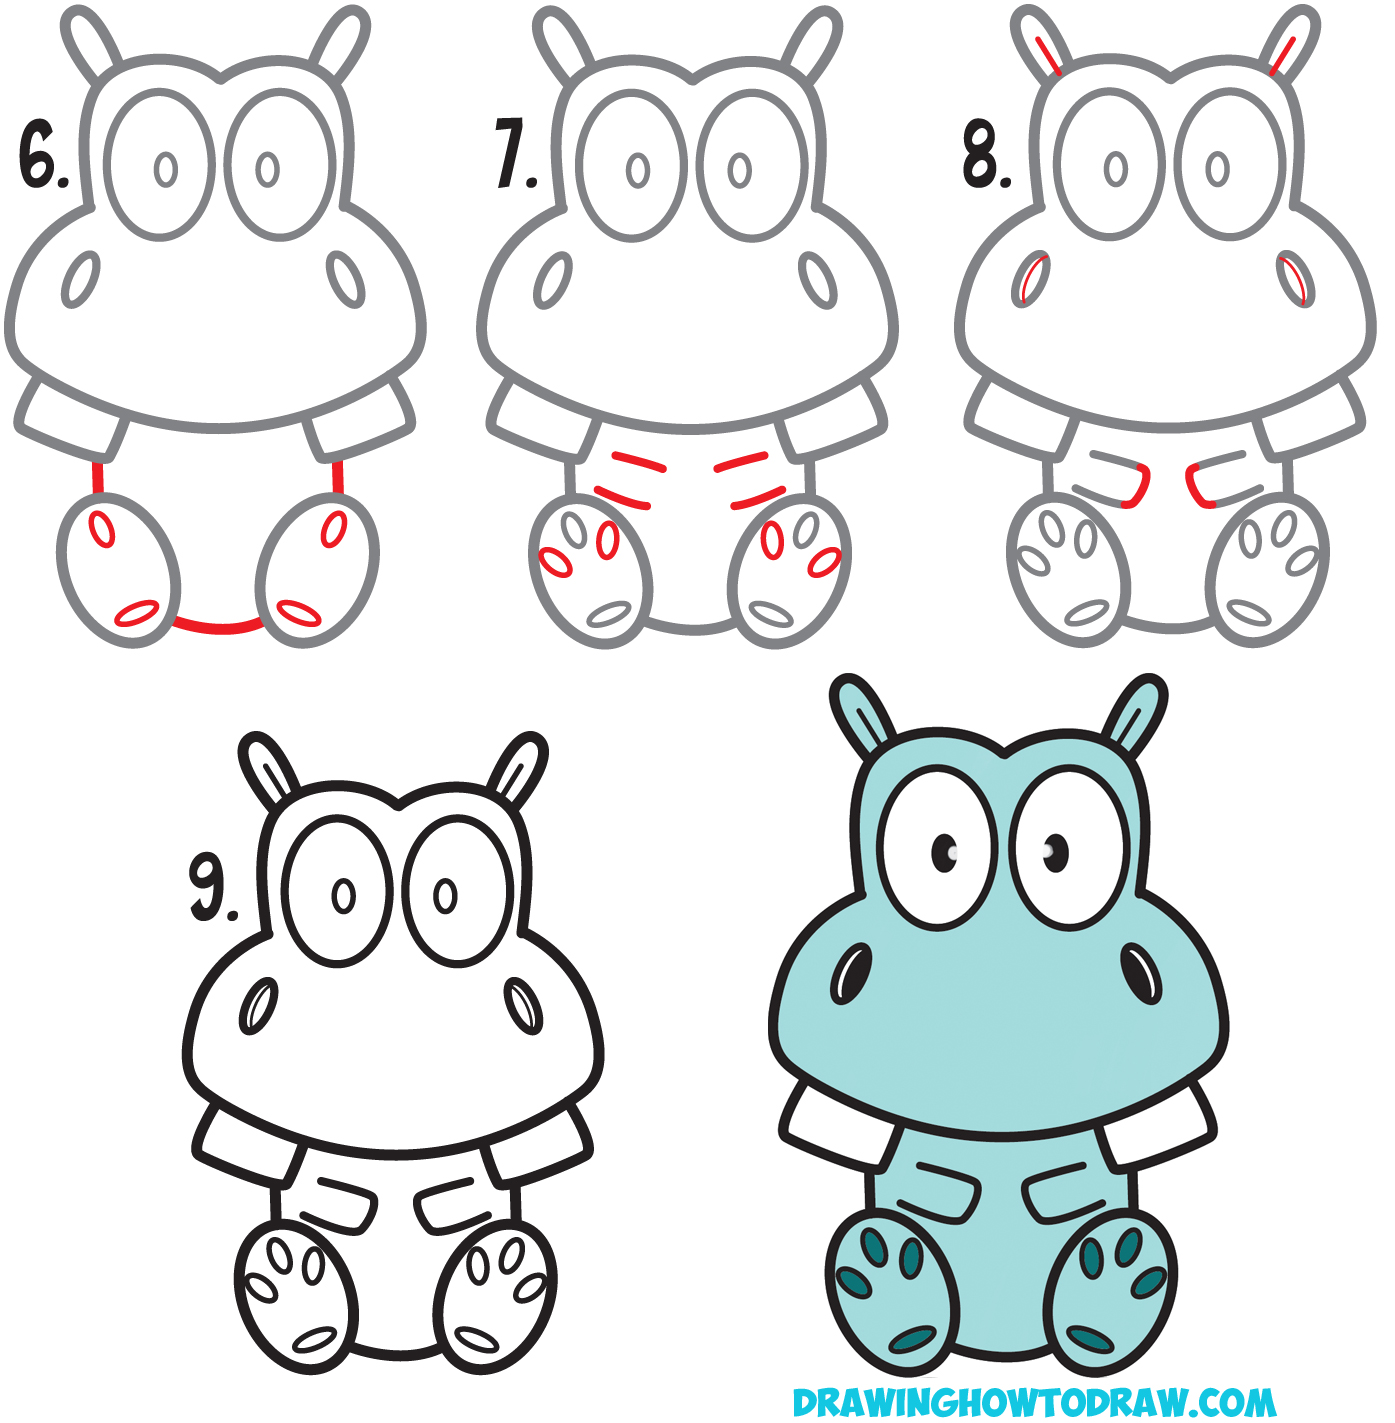 How To Draw A Cartoon Hippo